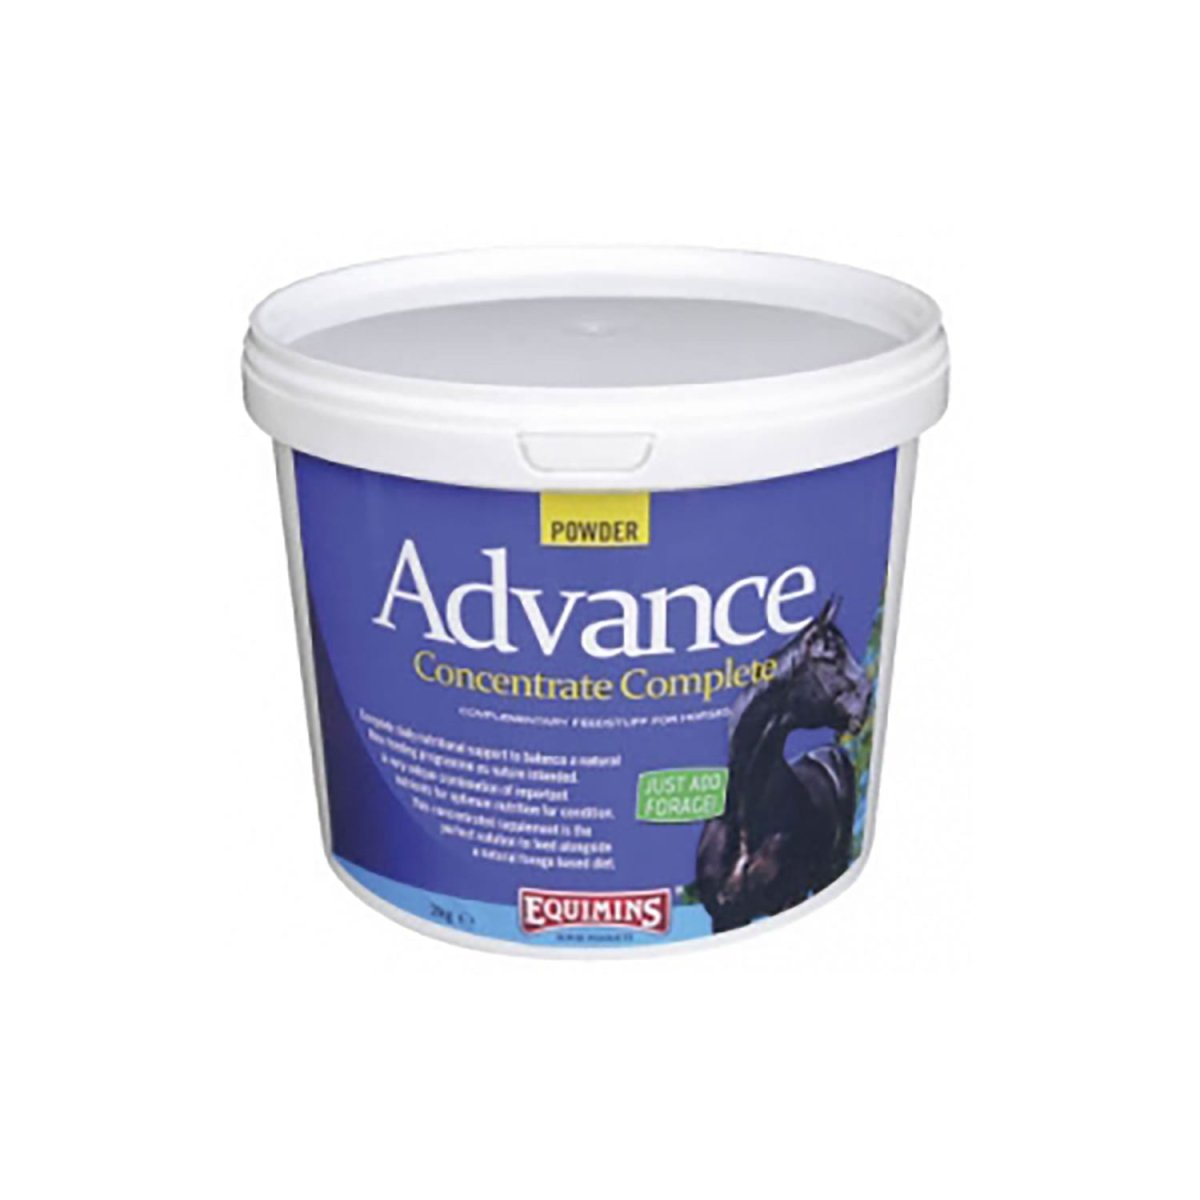 Equimins Advance Concentrate Complete Powder - 2Kg -